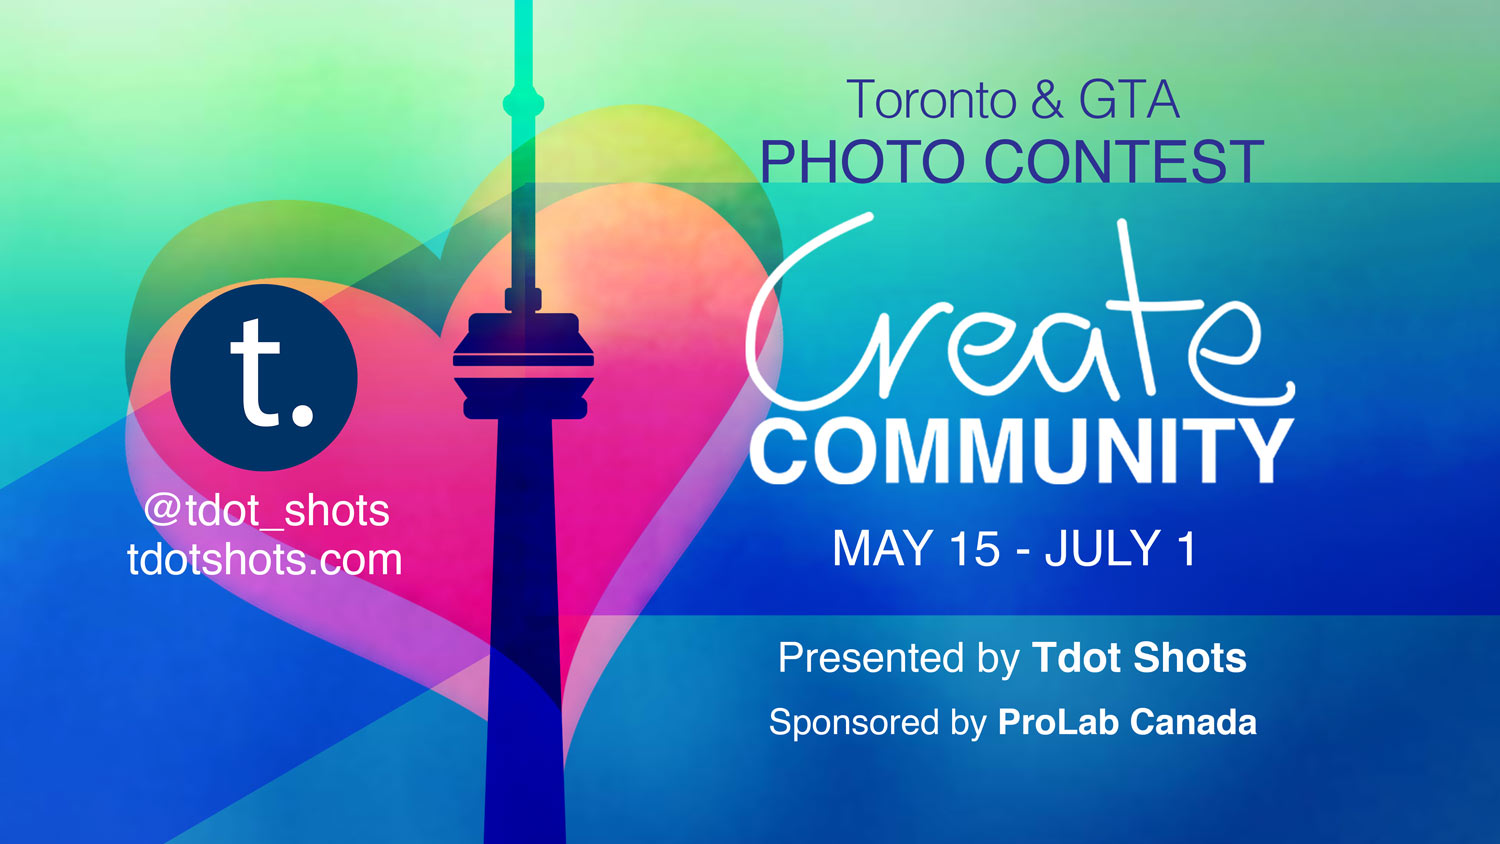 Enter the Tdot Shots Toronto Photo Contest May 15 – July 1 2020